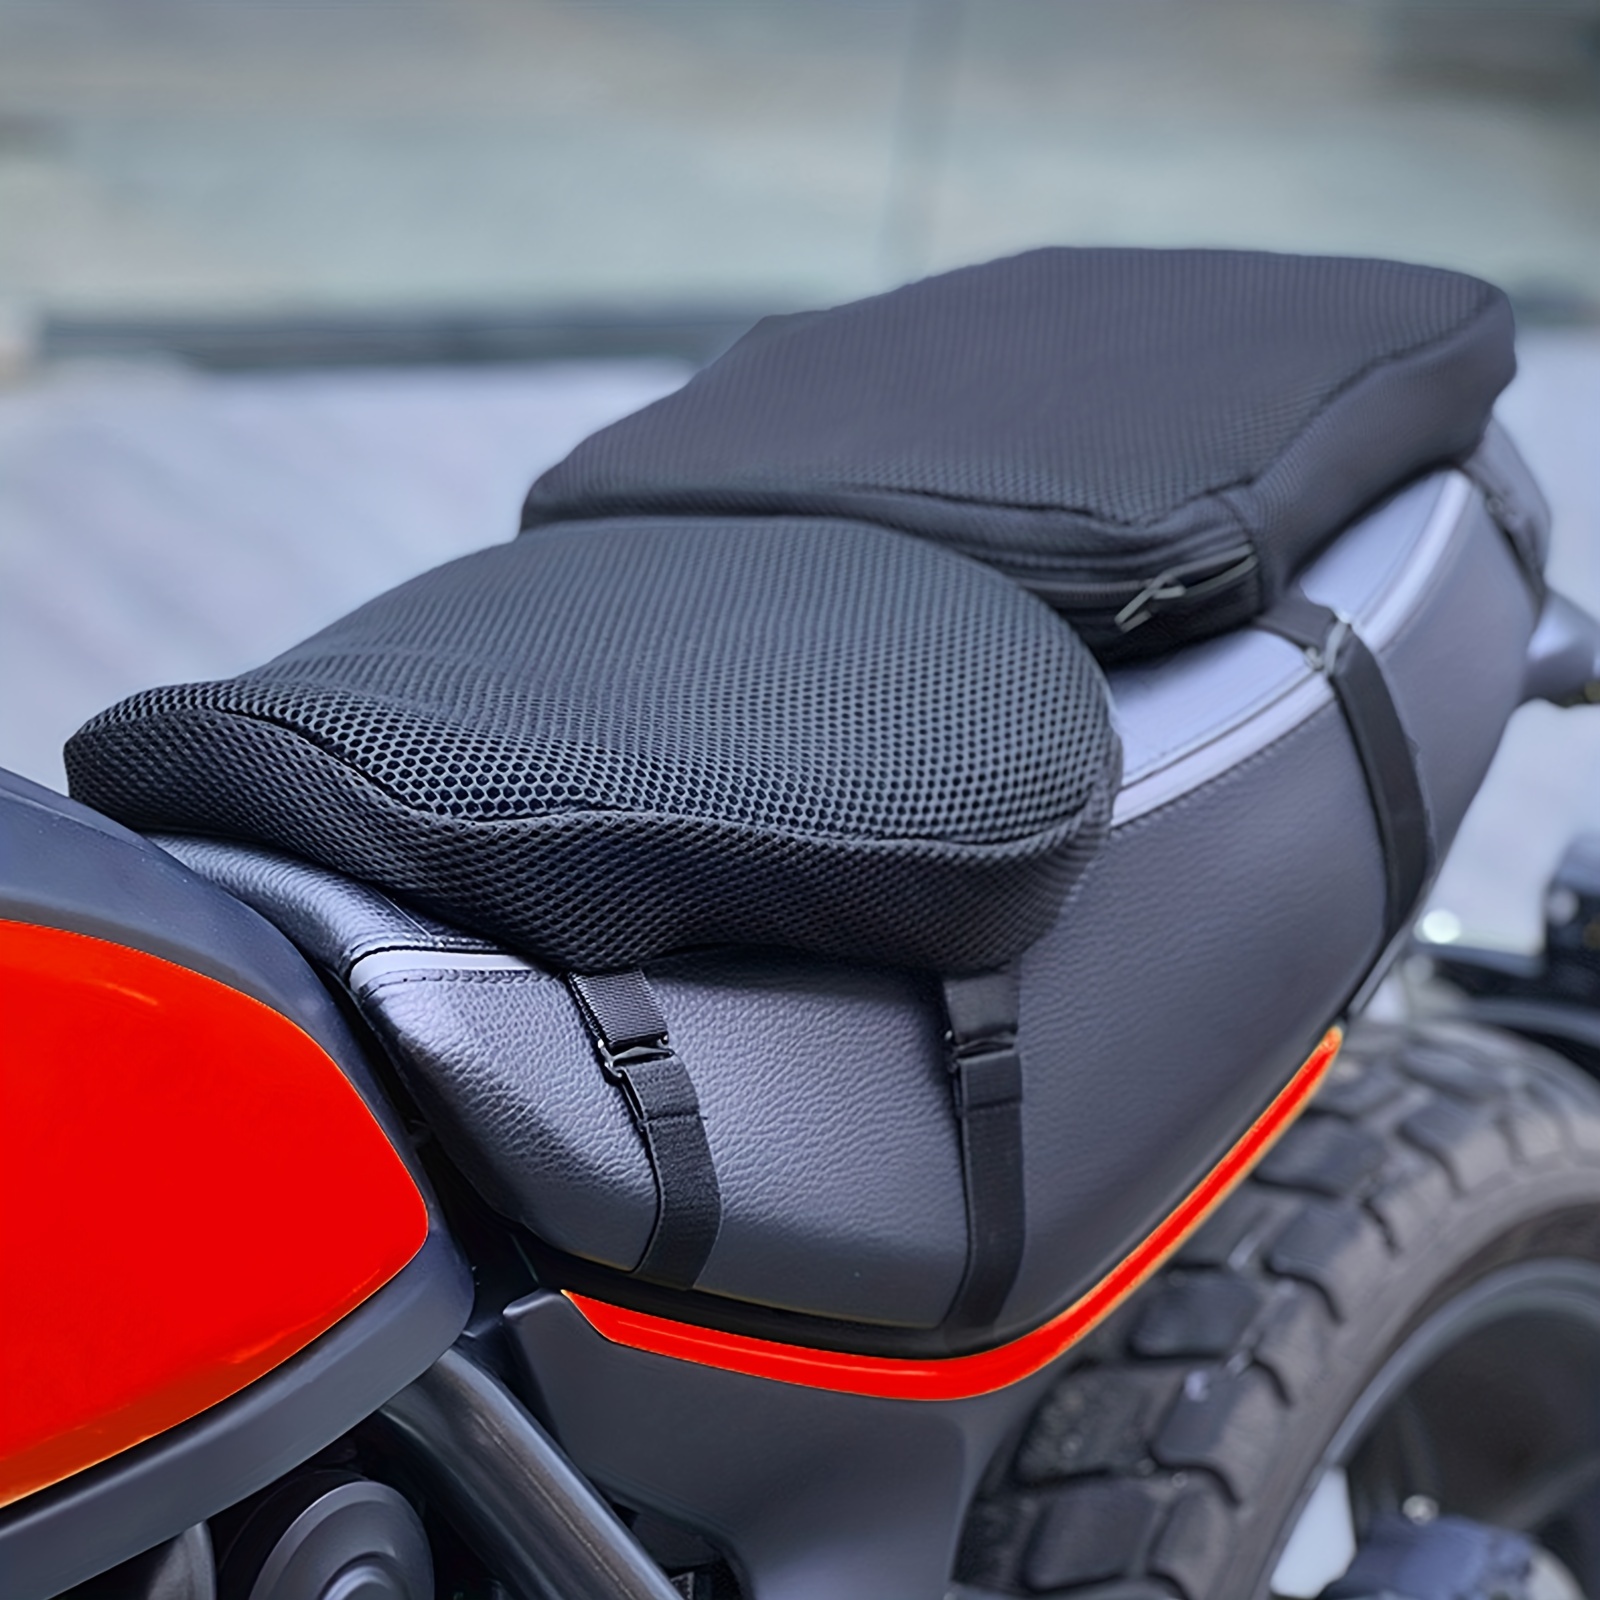 Motorcycle Seat Gel Pad Shock Absorption Mat Comfortable